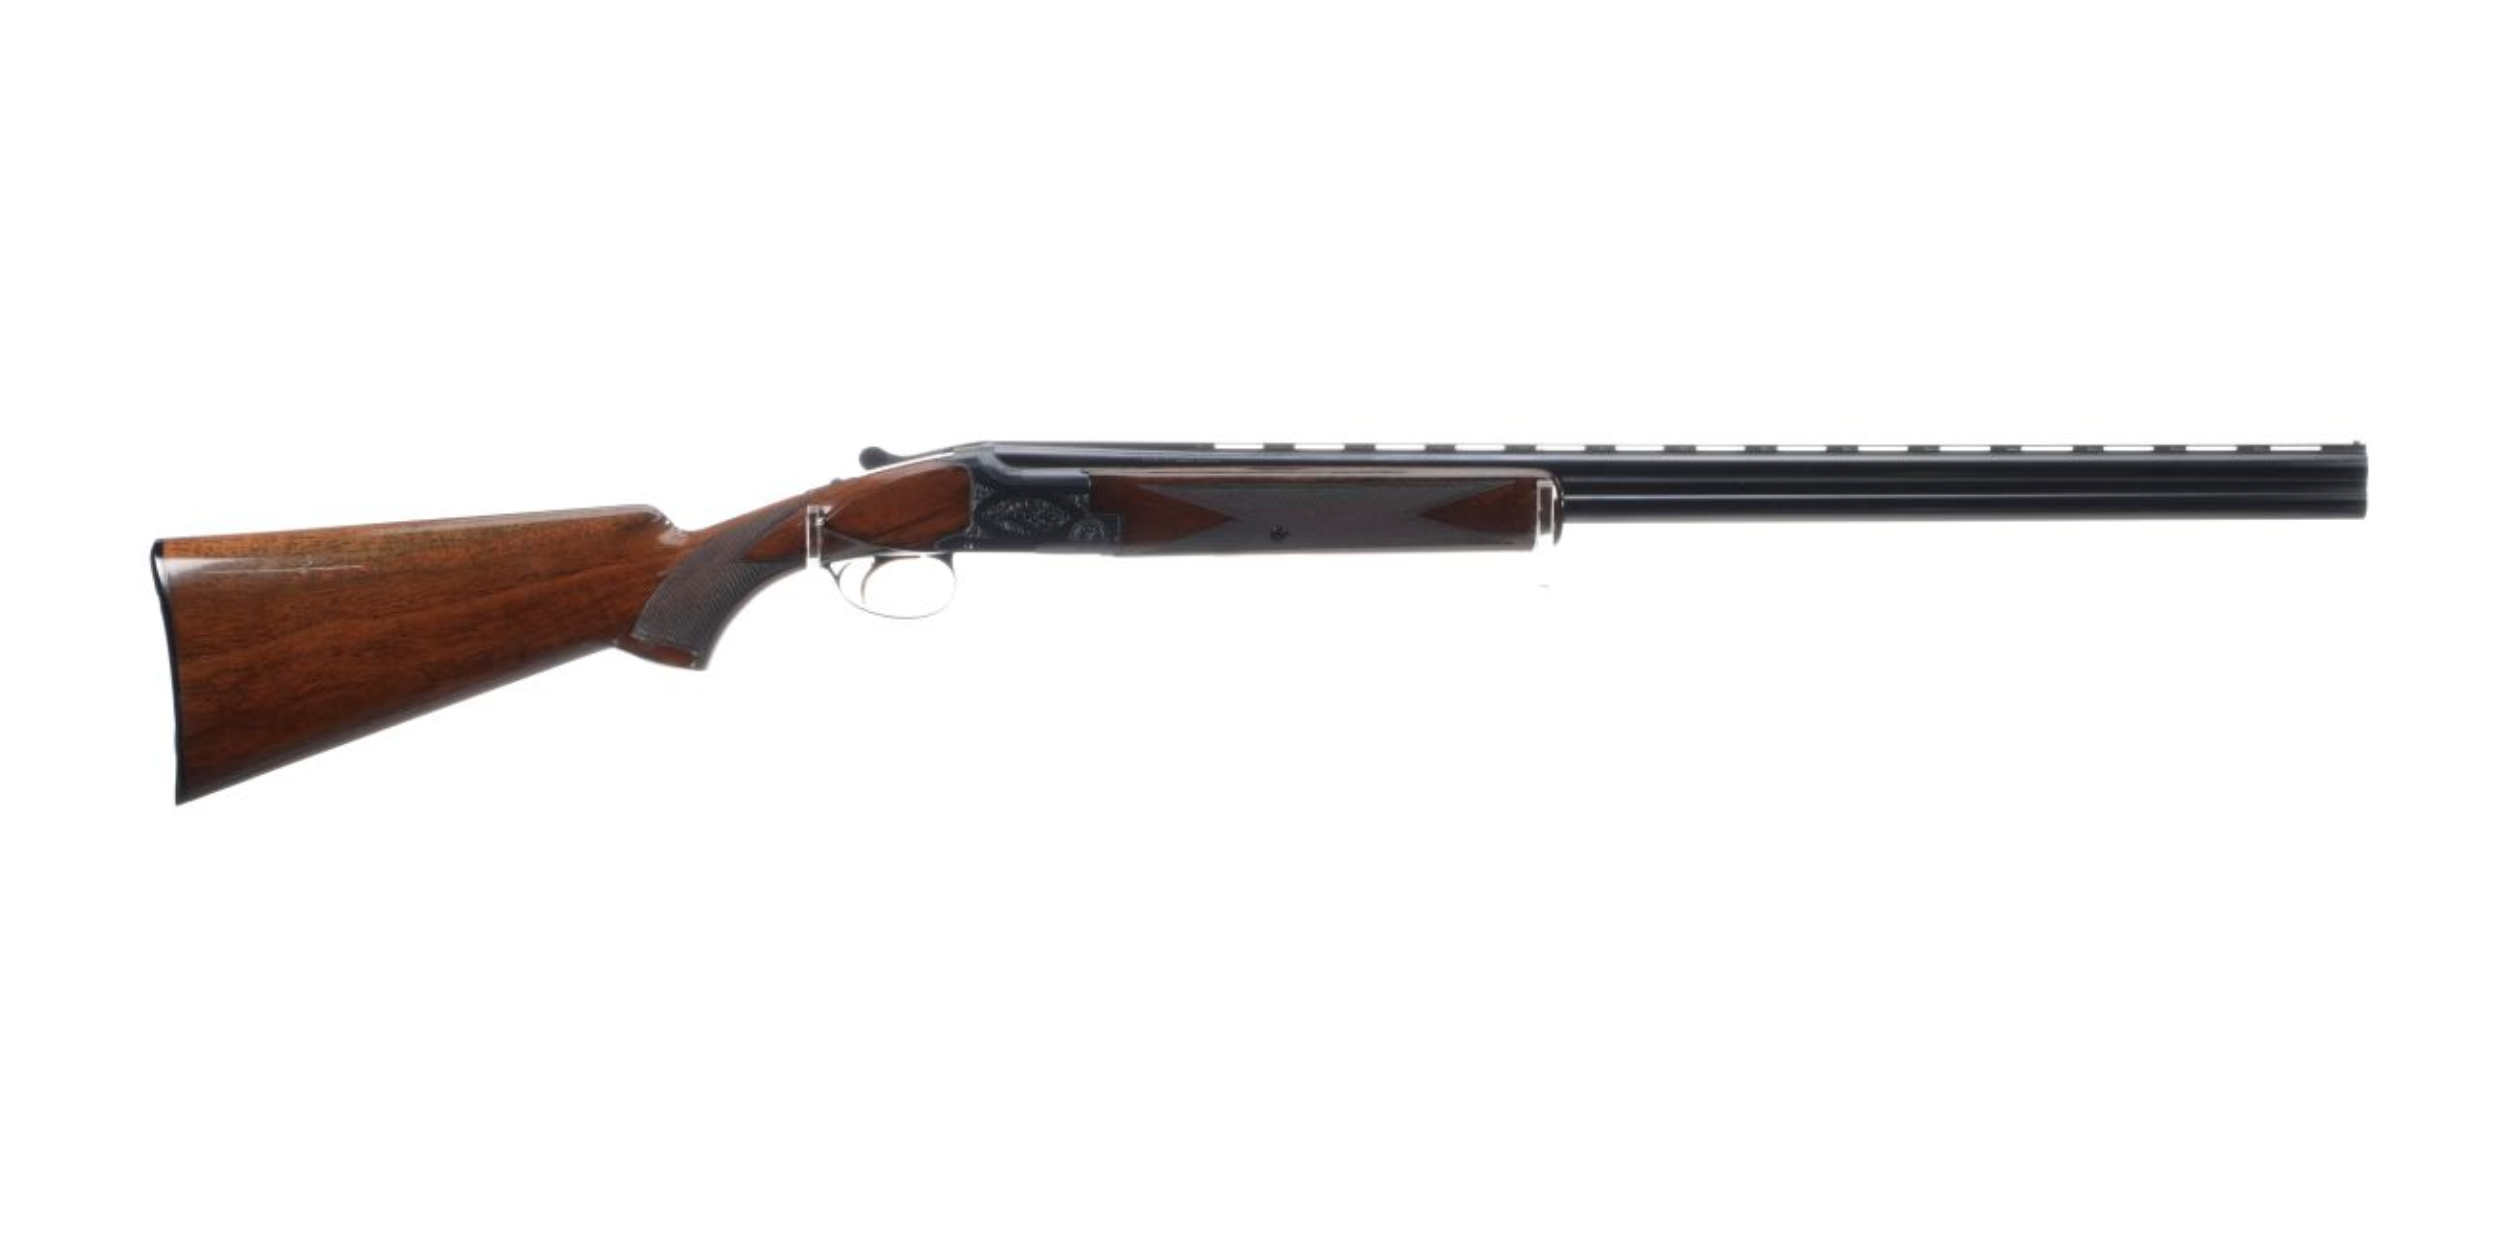 Browning shotgun on a white background.